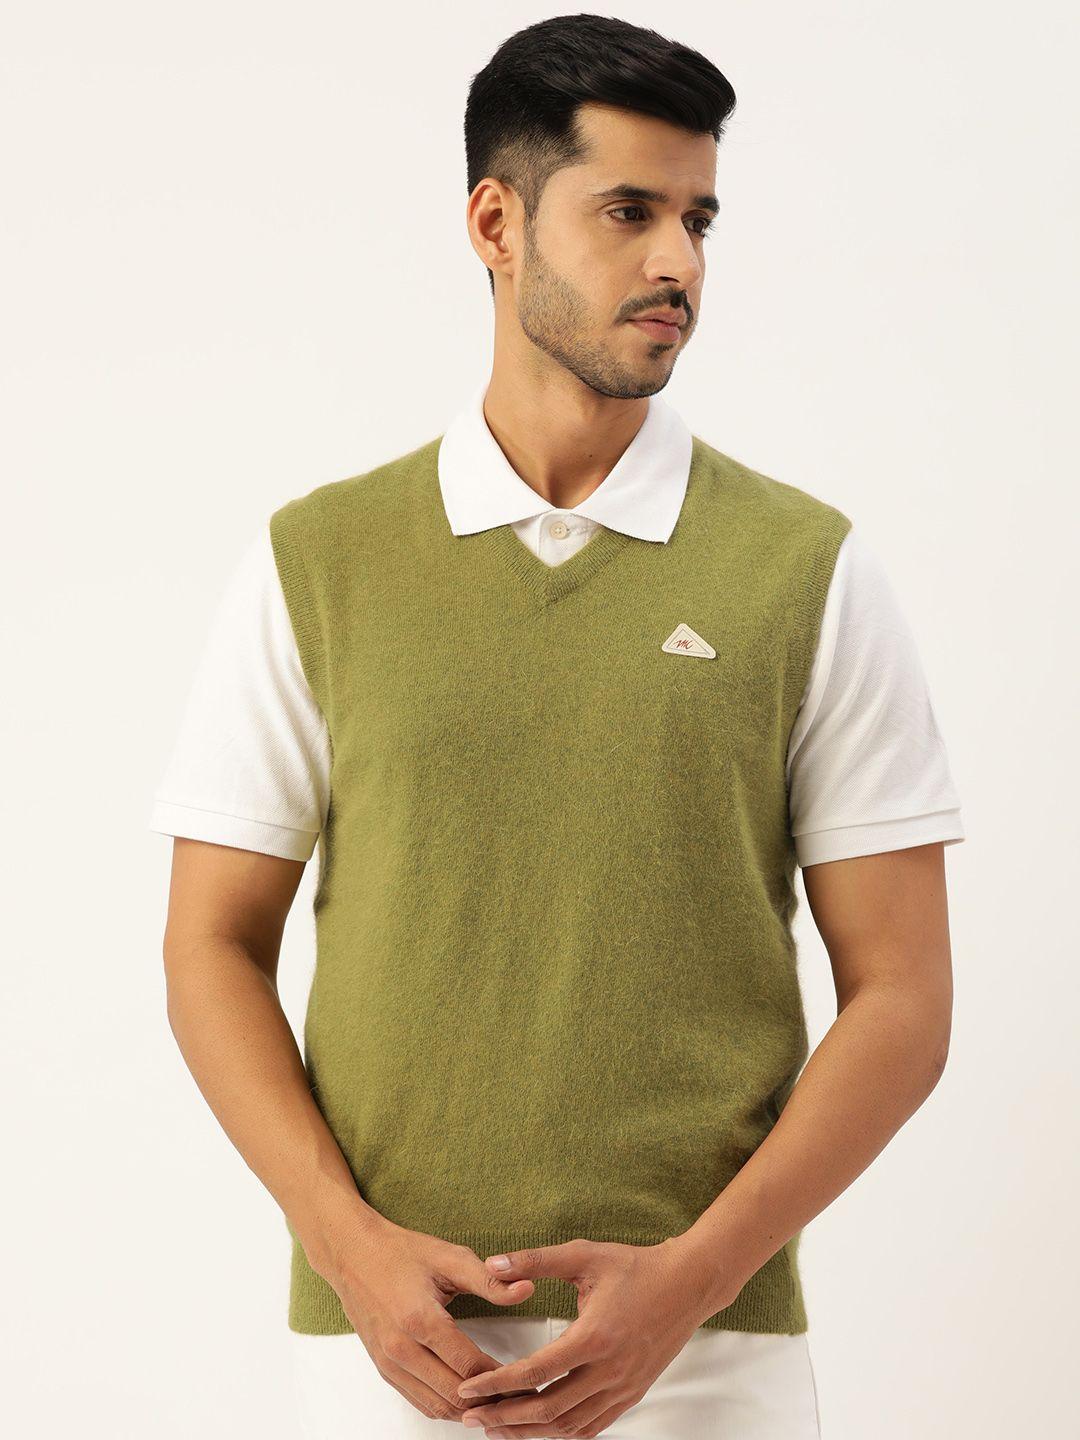 monte carlo men green solid sweater vest